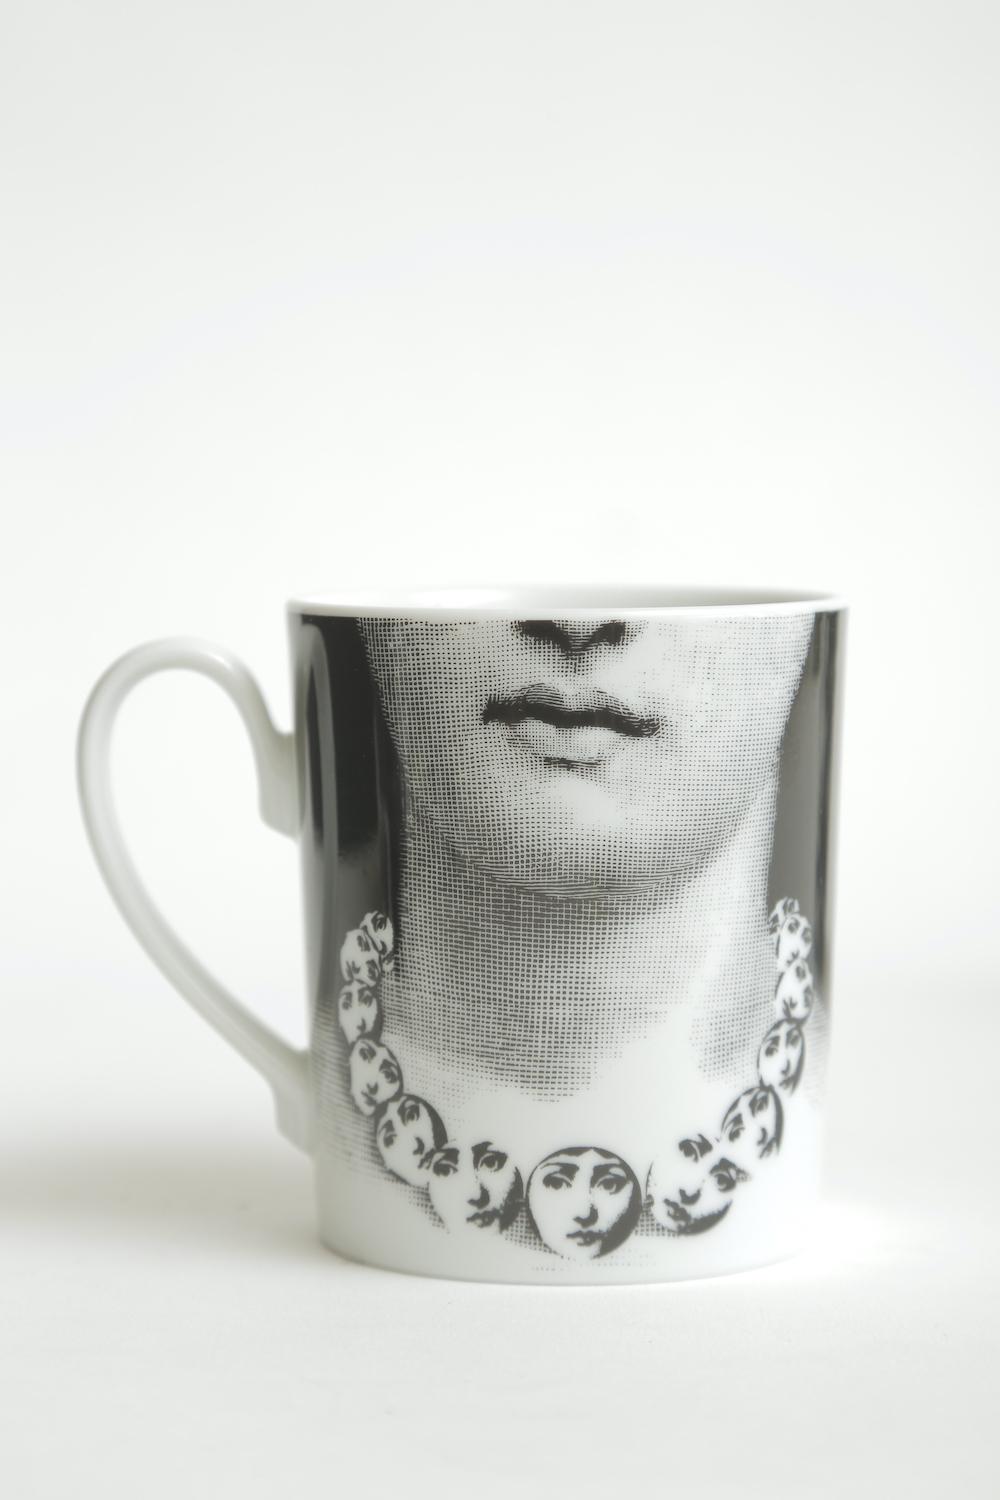 Piero Fornasetti for Rosenthal Lina Porcelain Coffee or Tea Mugs Vintage Set /4 2